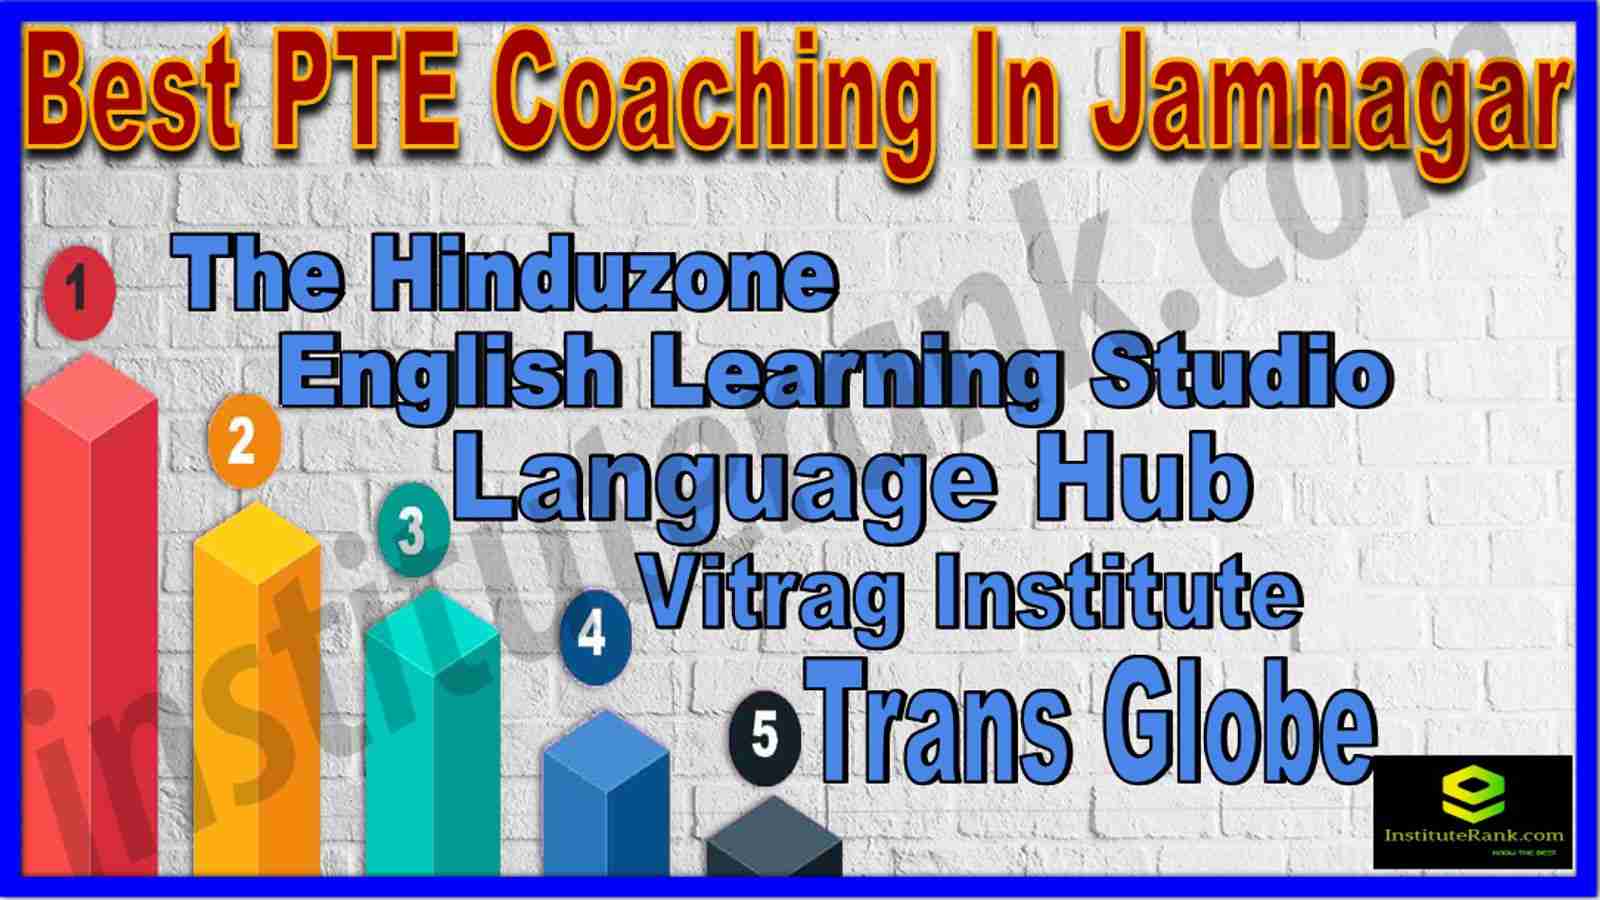 Best PTE Coaching In Jamnagar